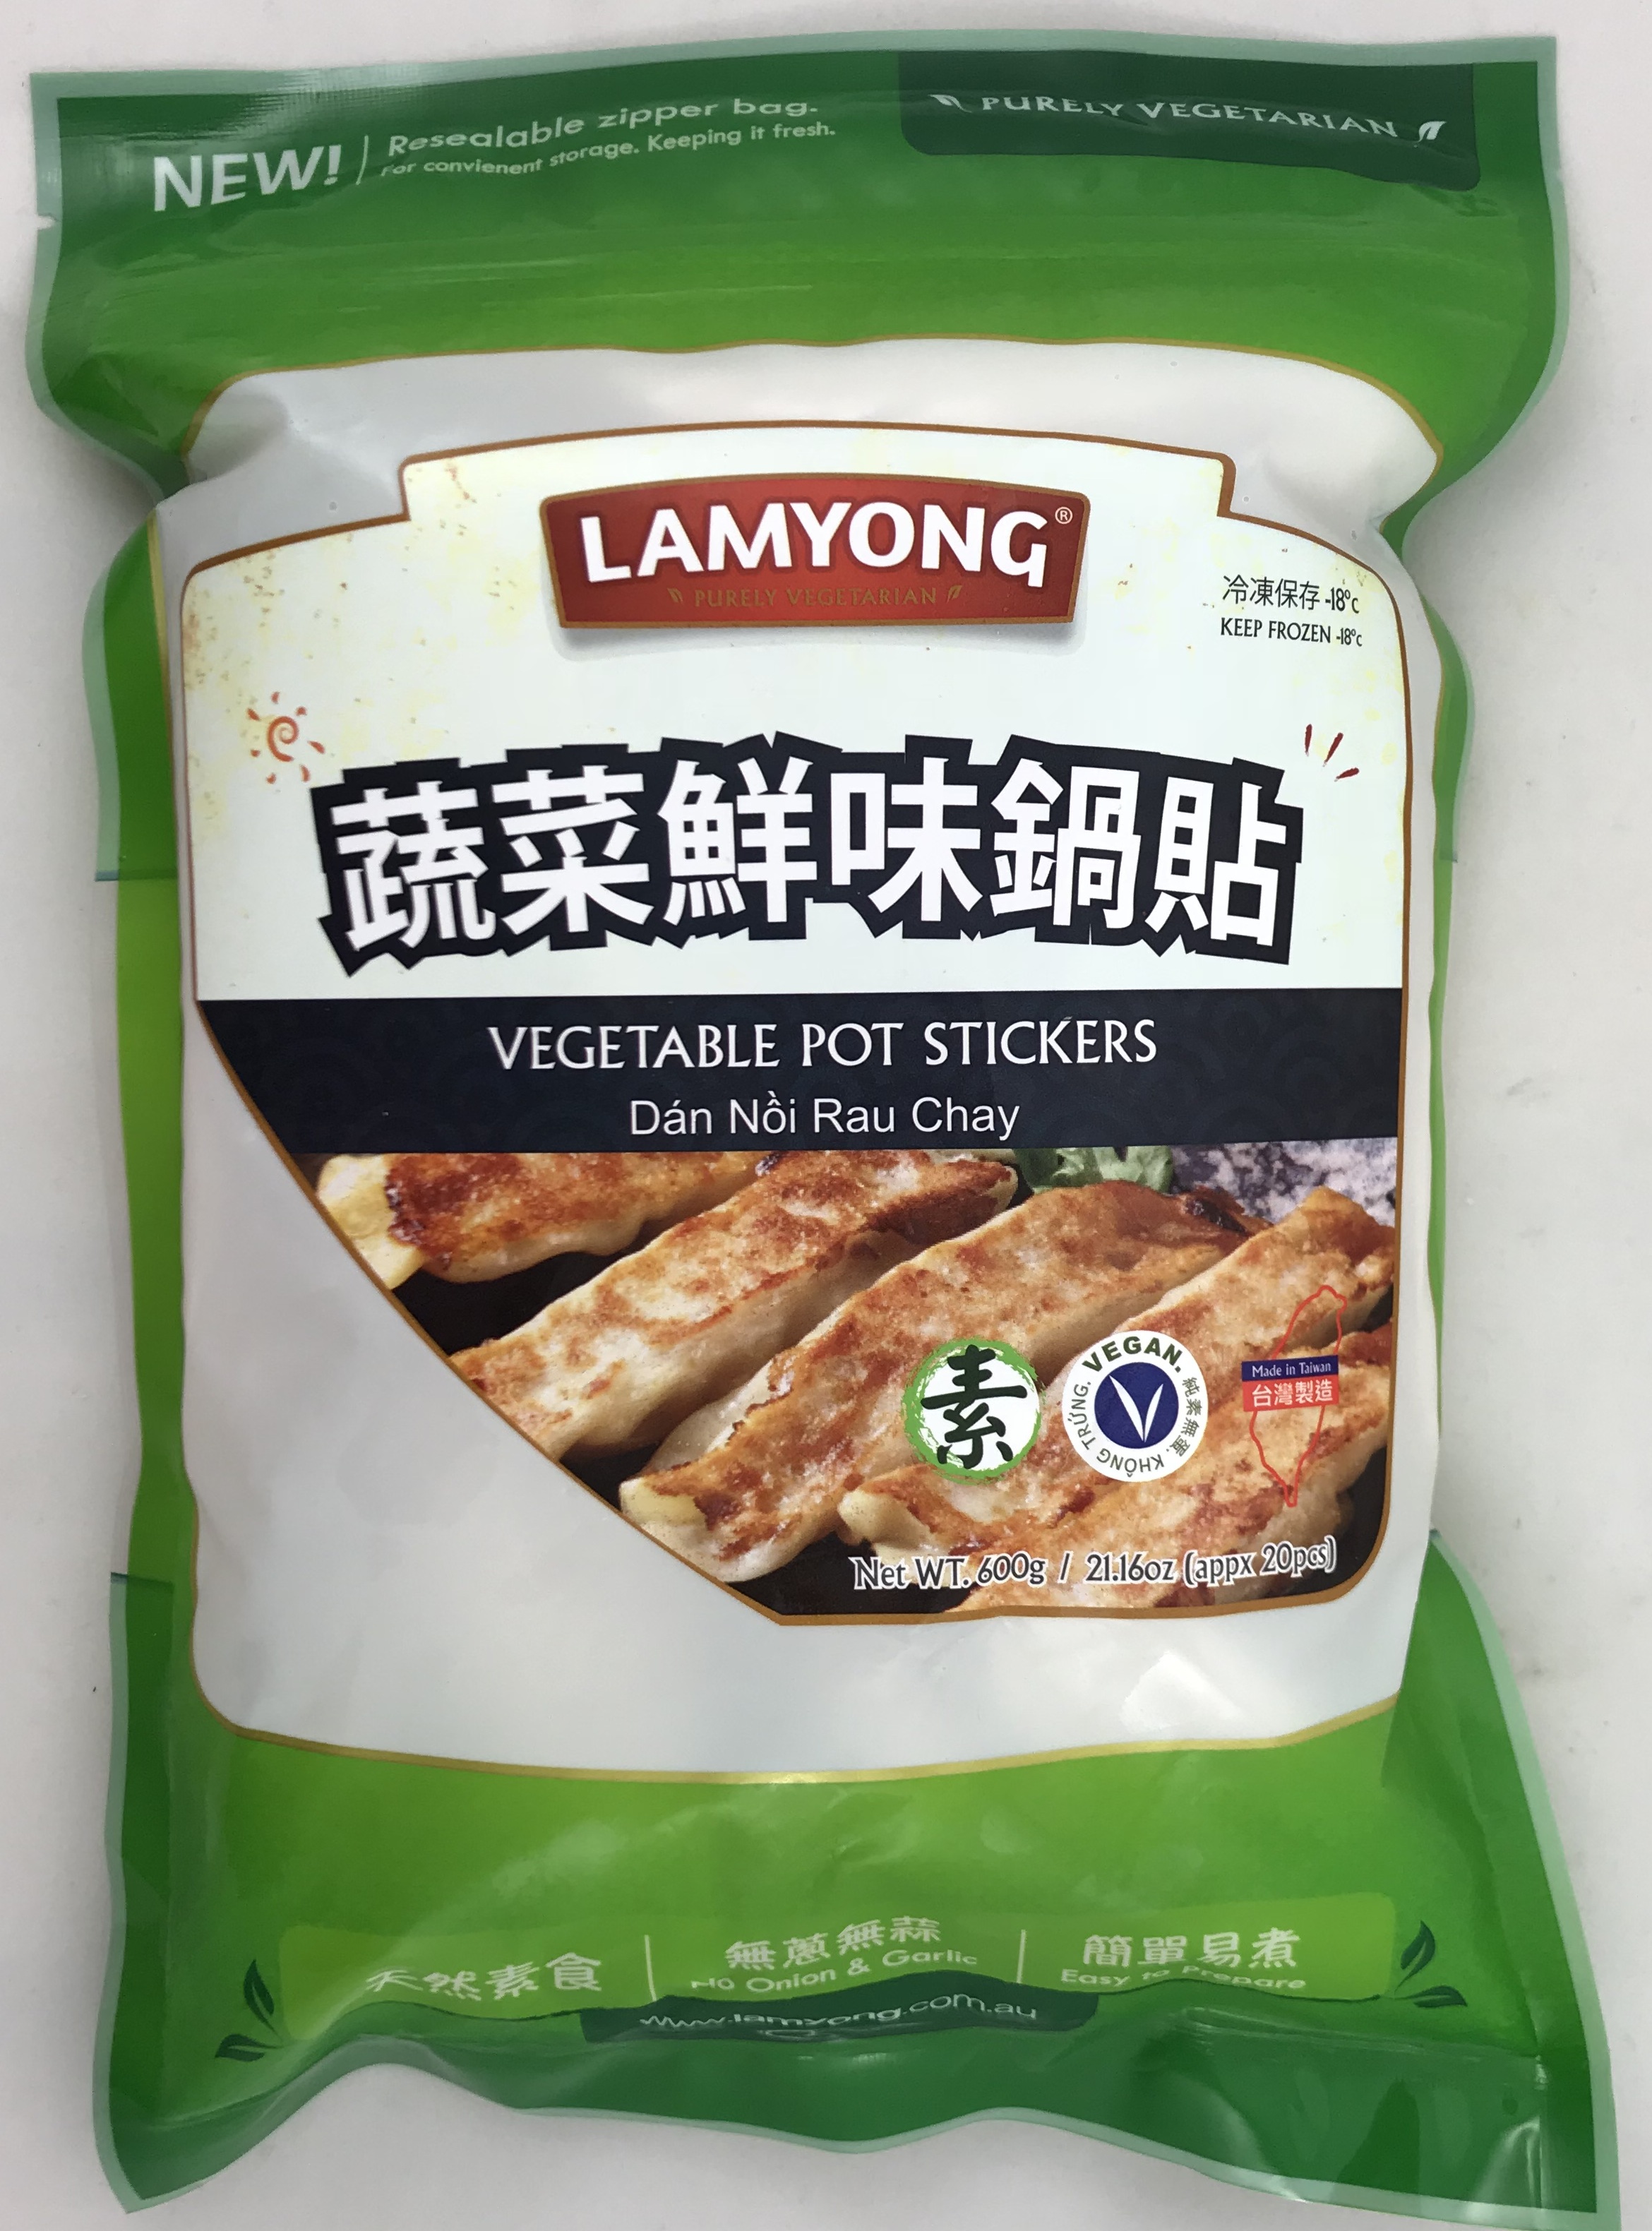 Lamyong Vegetable Pot Stickers